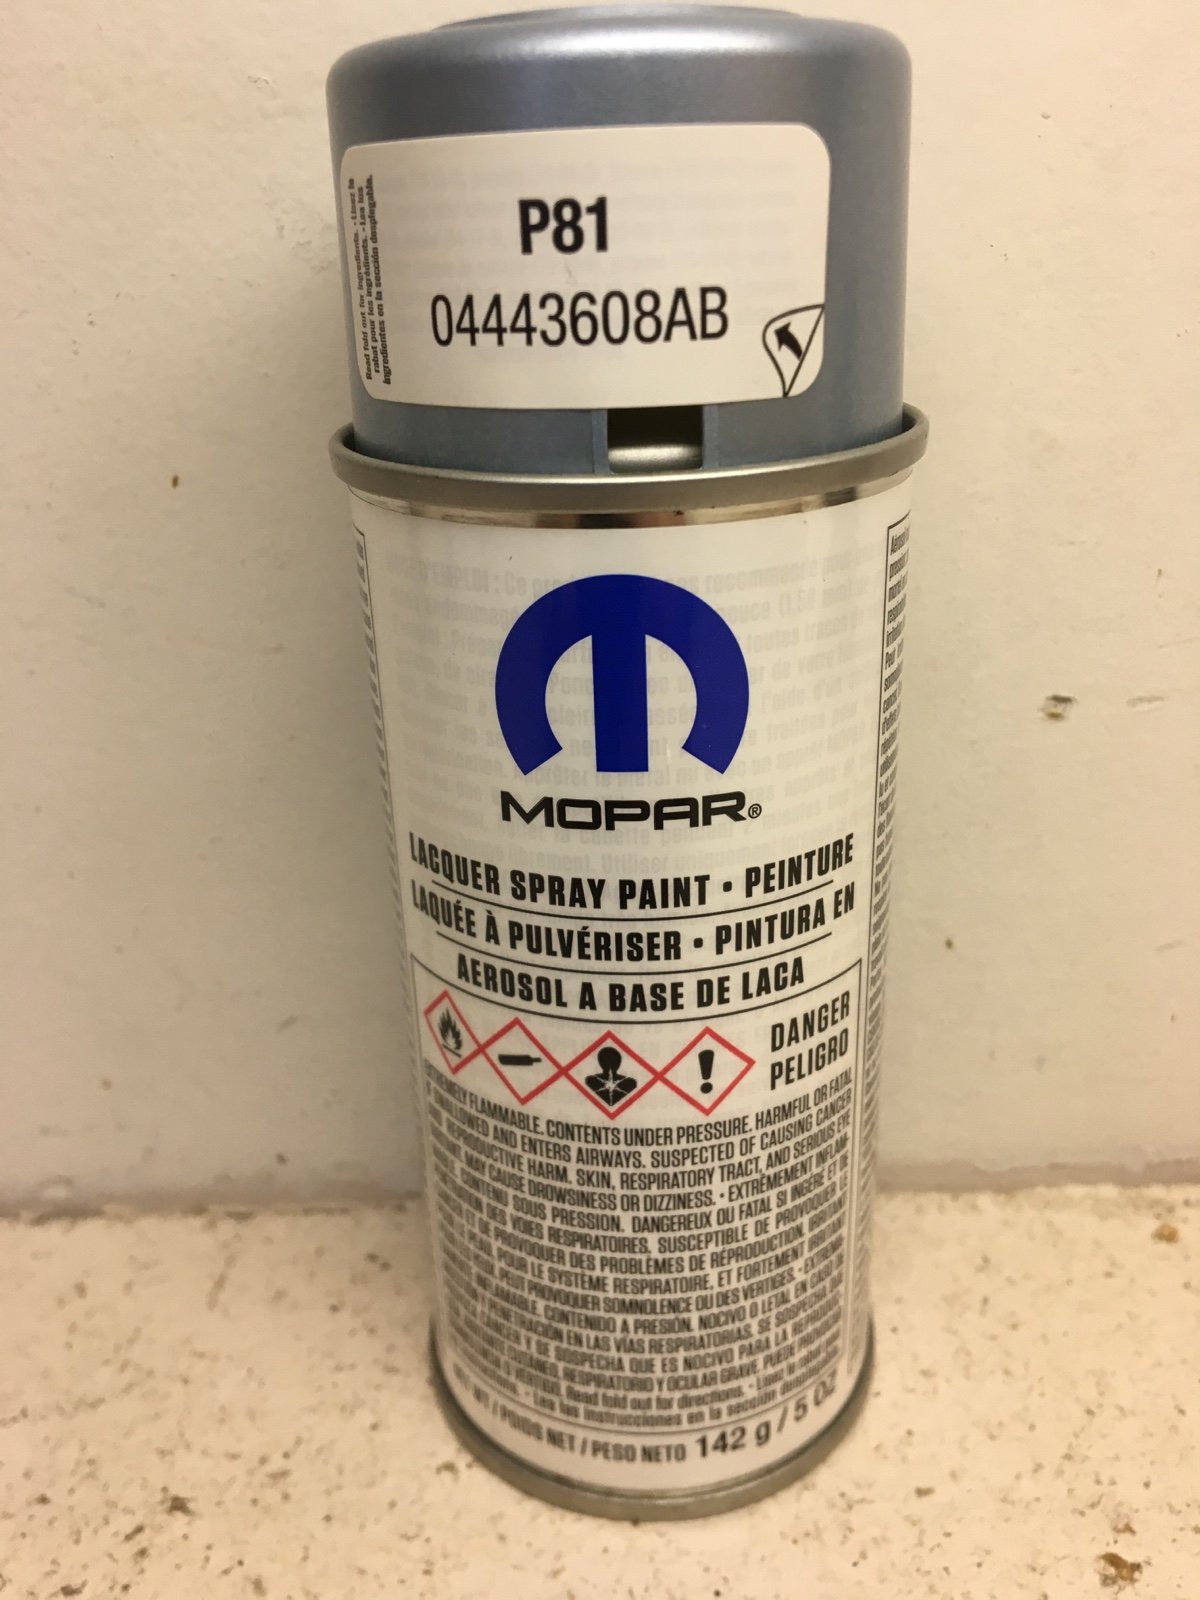 Mopar P81 factory touch up spray paint fy7xNzysj